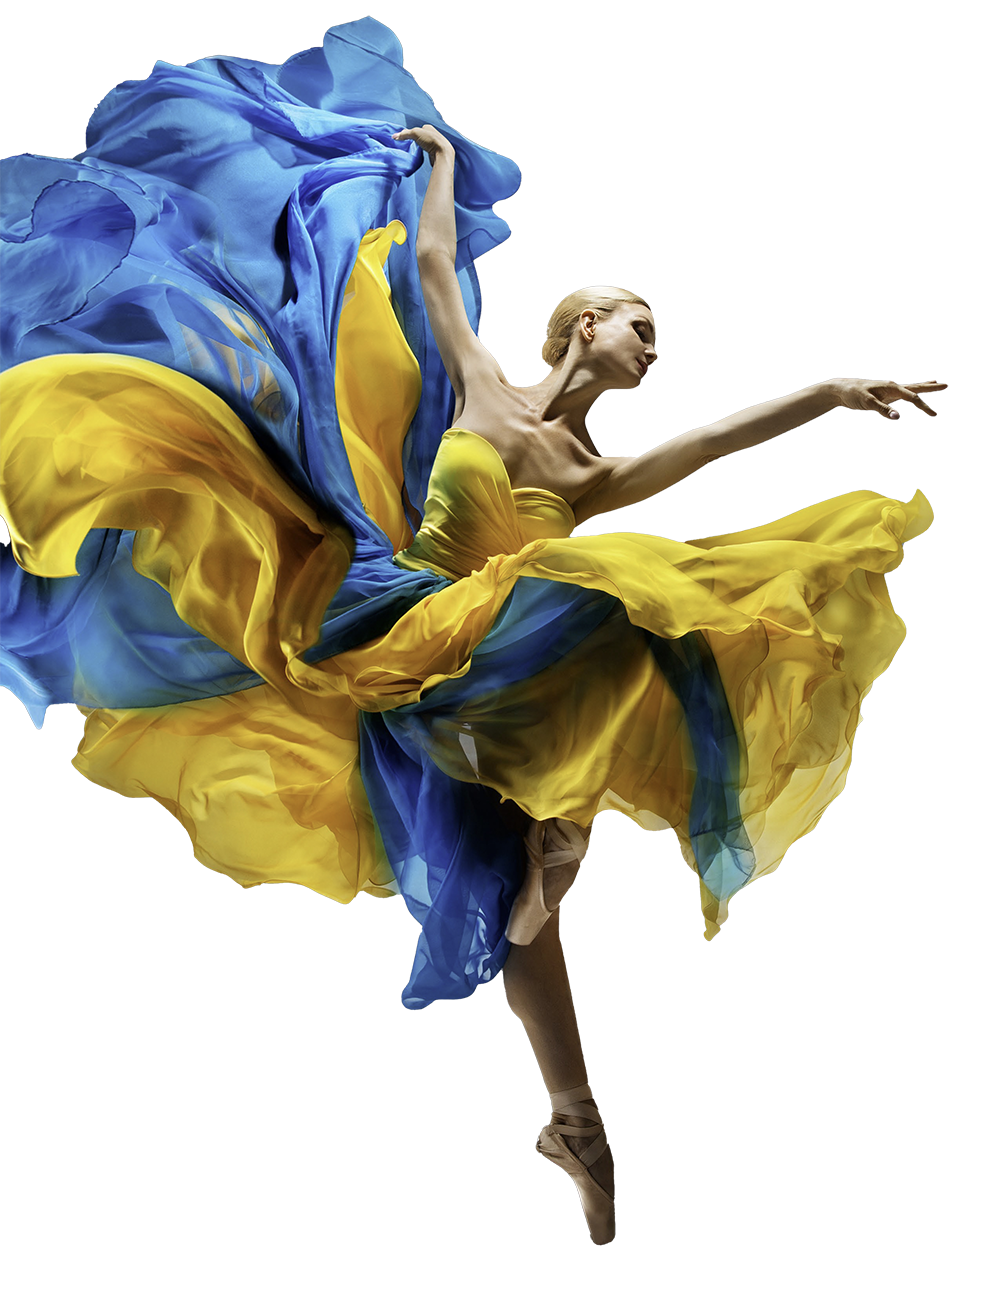 Ballet national d'Ukraine